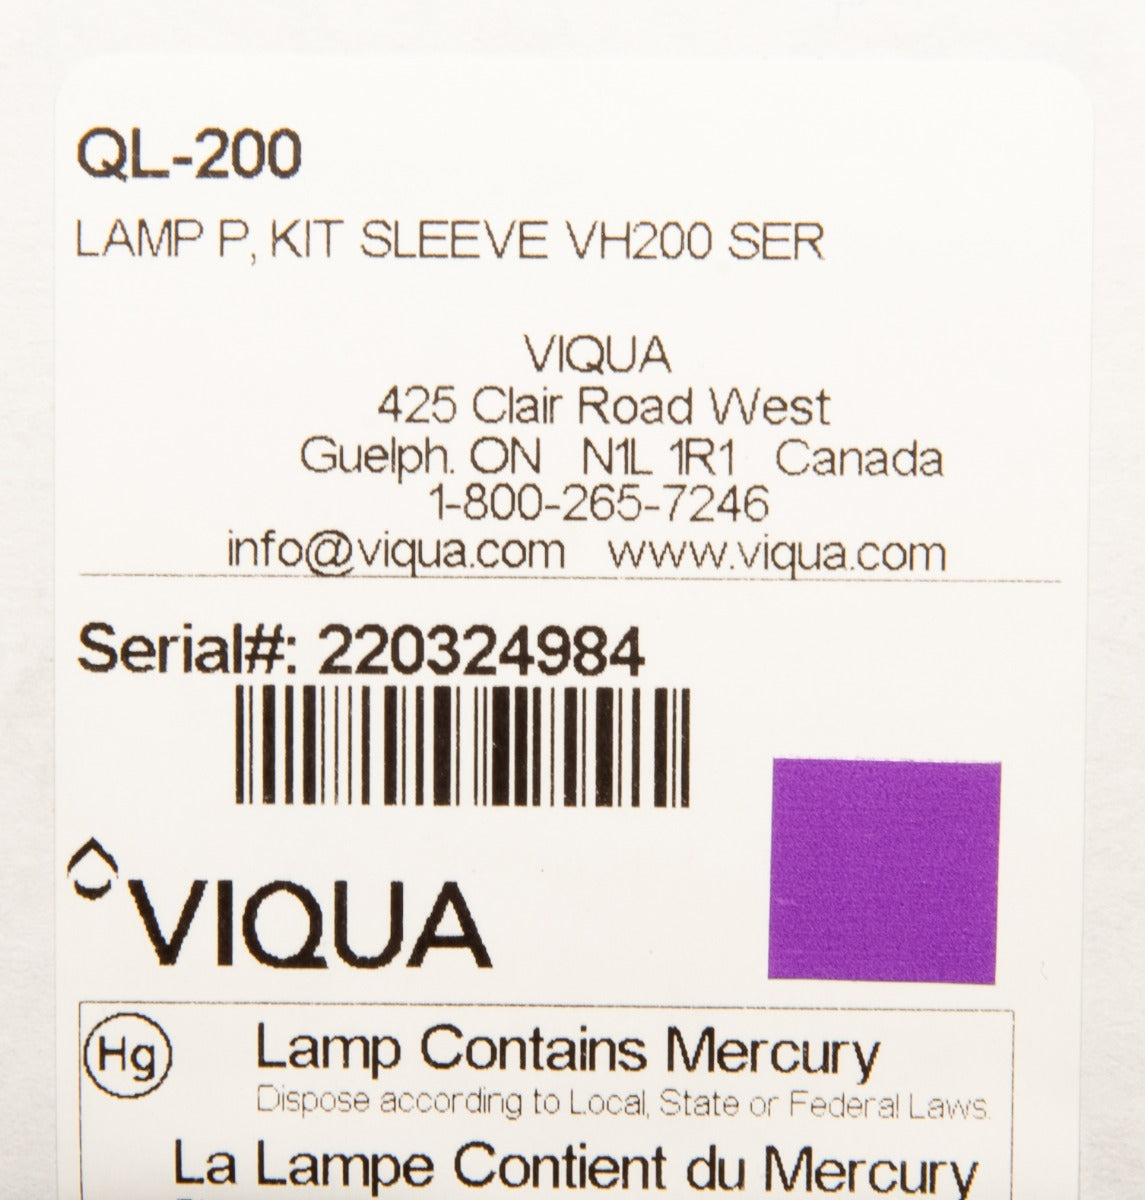 Viqua QL-200 Replacement Lamp and Quartz Sleeve for VH200